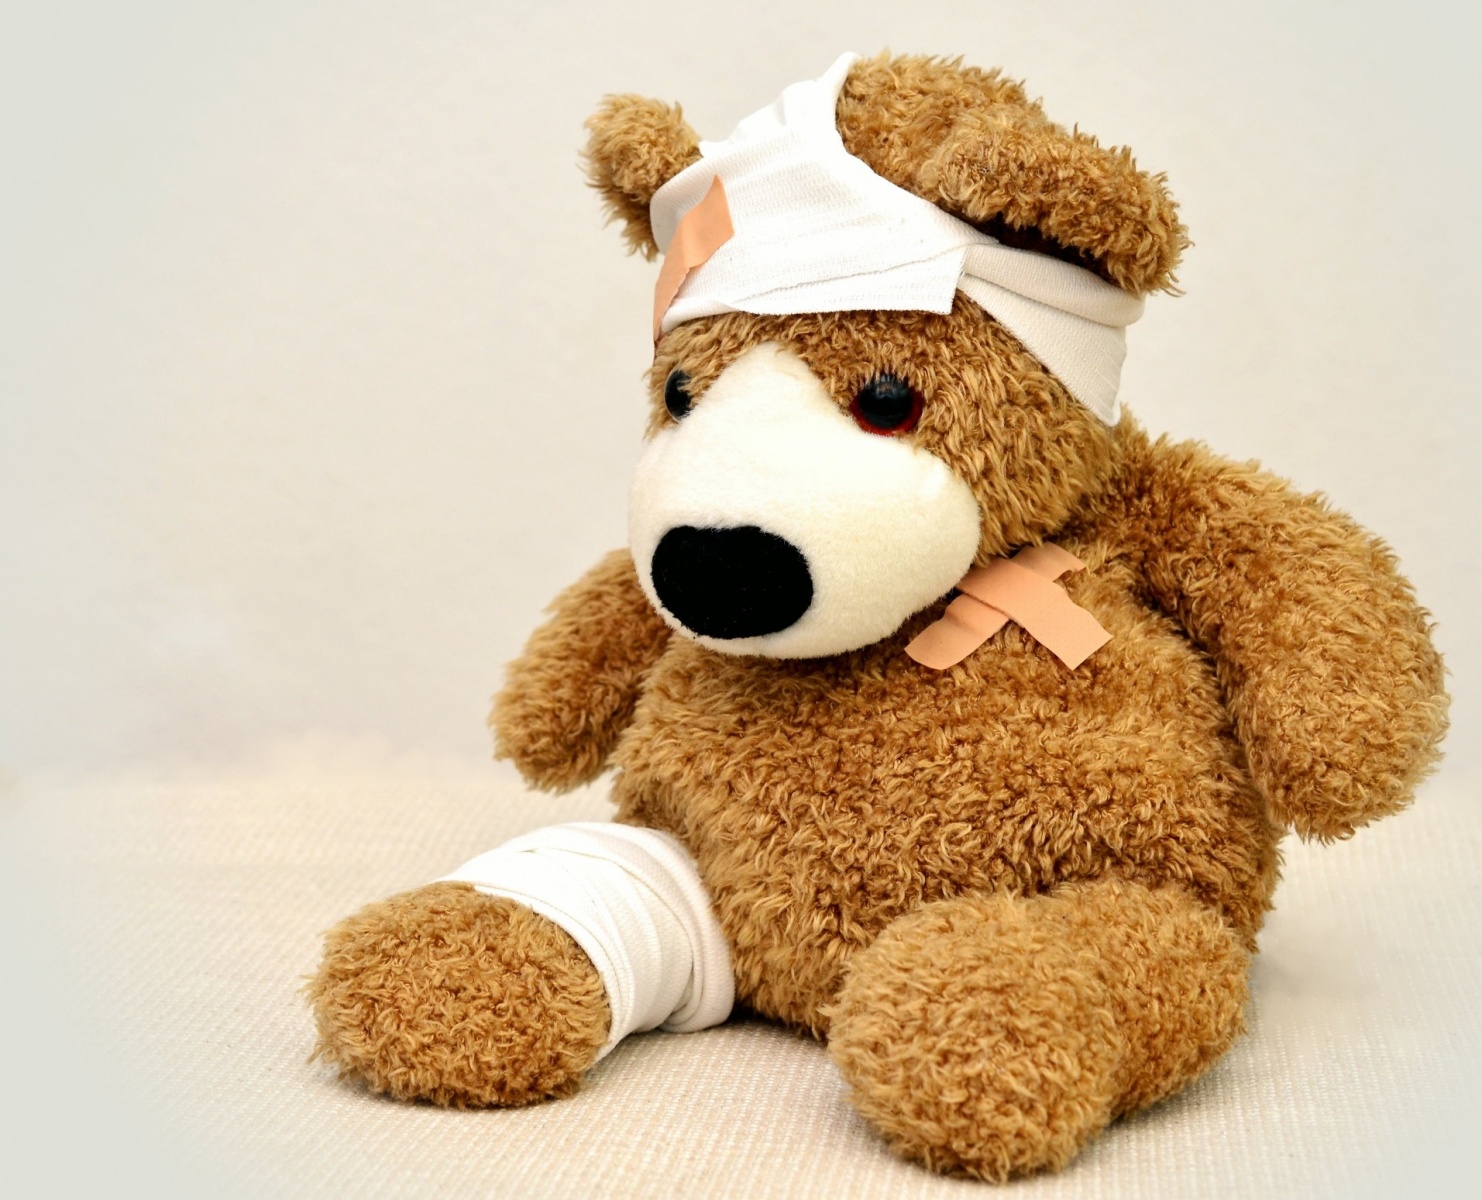 injured bear model